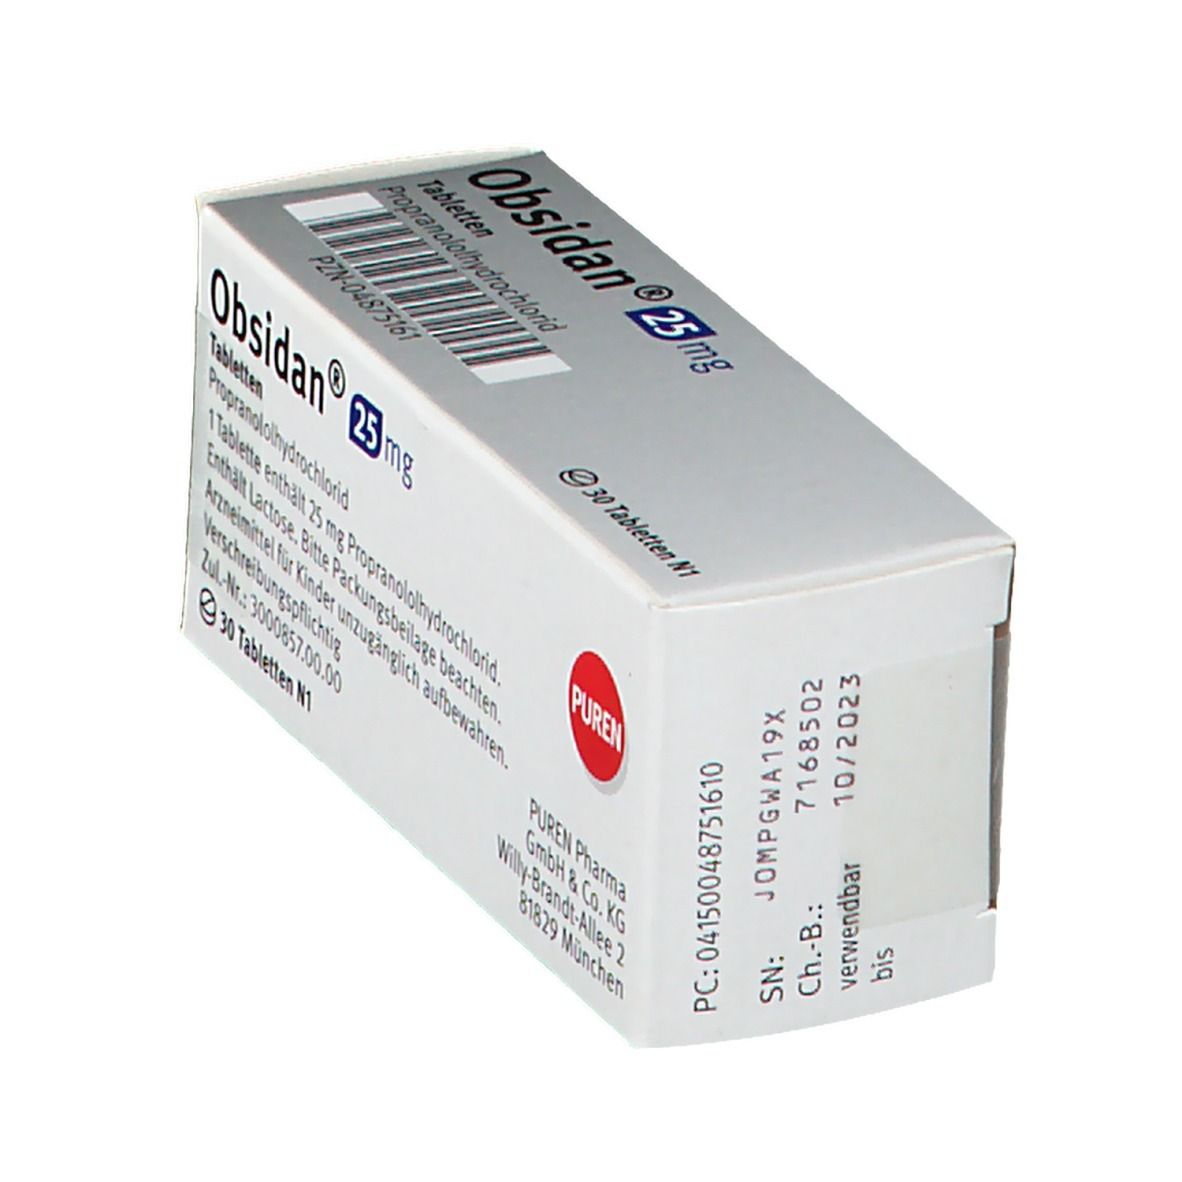 Obsidan® 25 mg